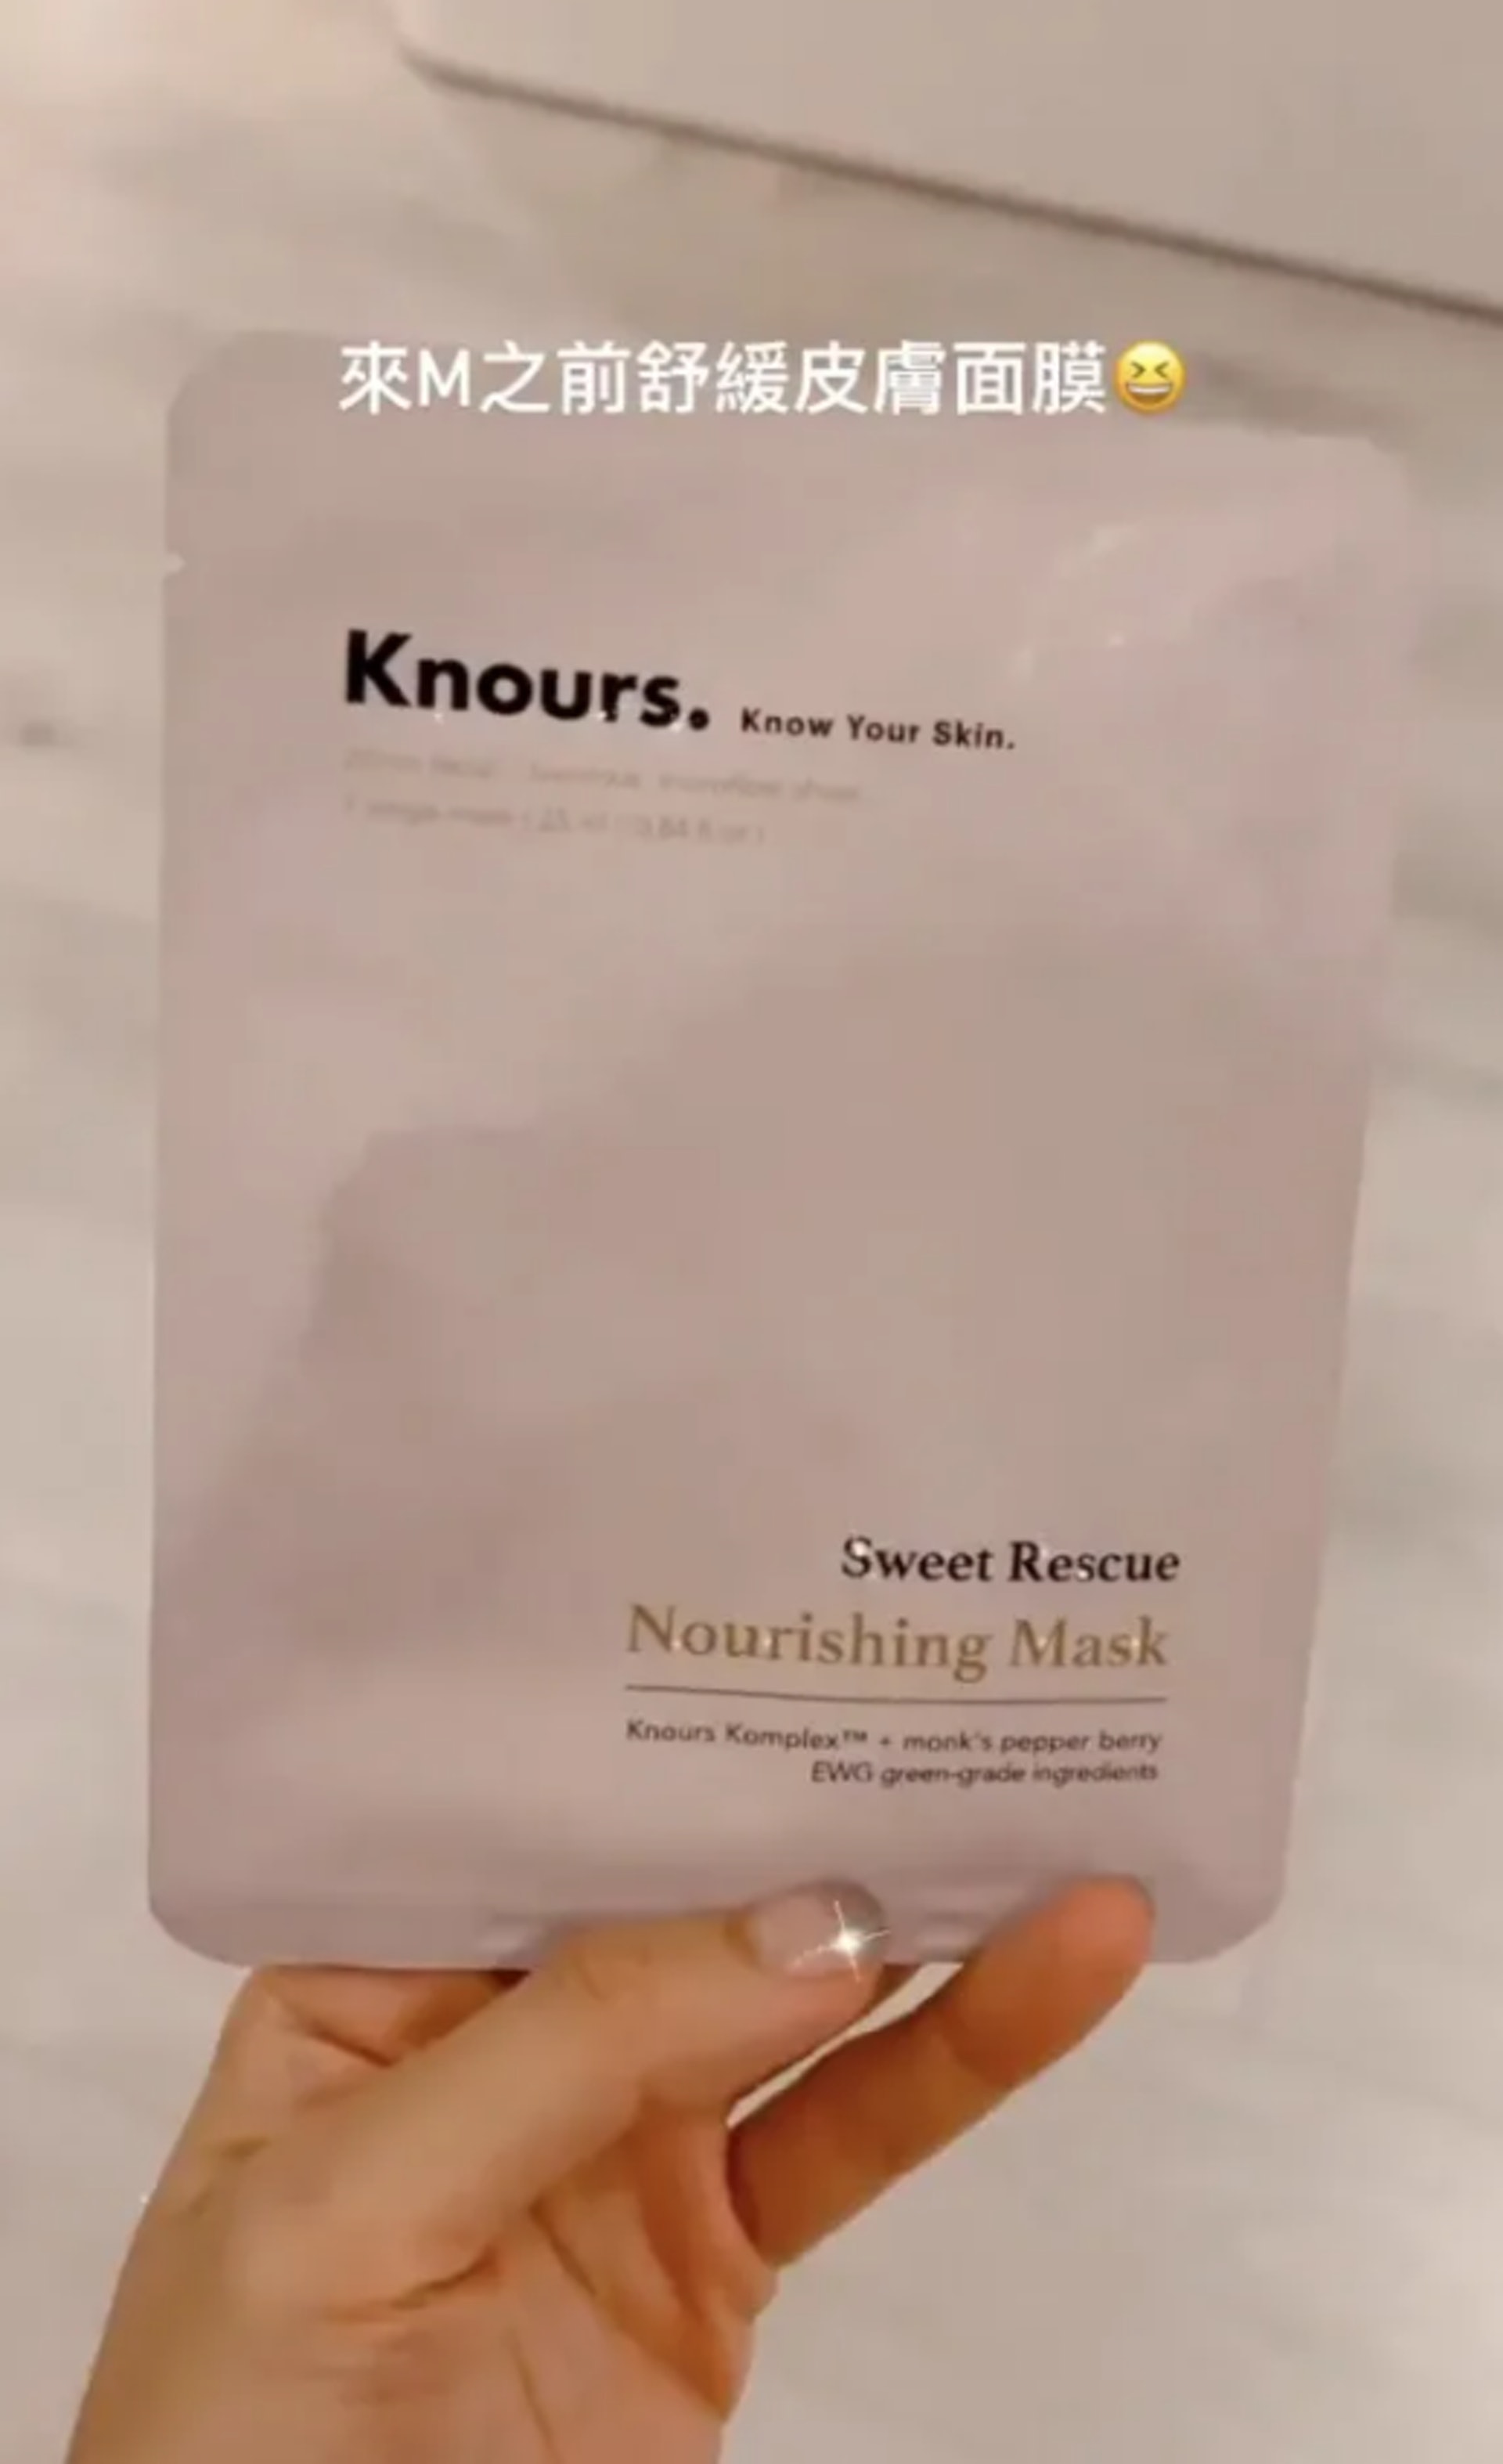 Knours. Know Your Skin. Sweet Rescue Nourishing Mask含有高含量的類黃酮和抗氧化成分，有助舒緩及調節月經期間所帶來的肌膚問題。